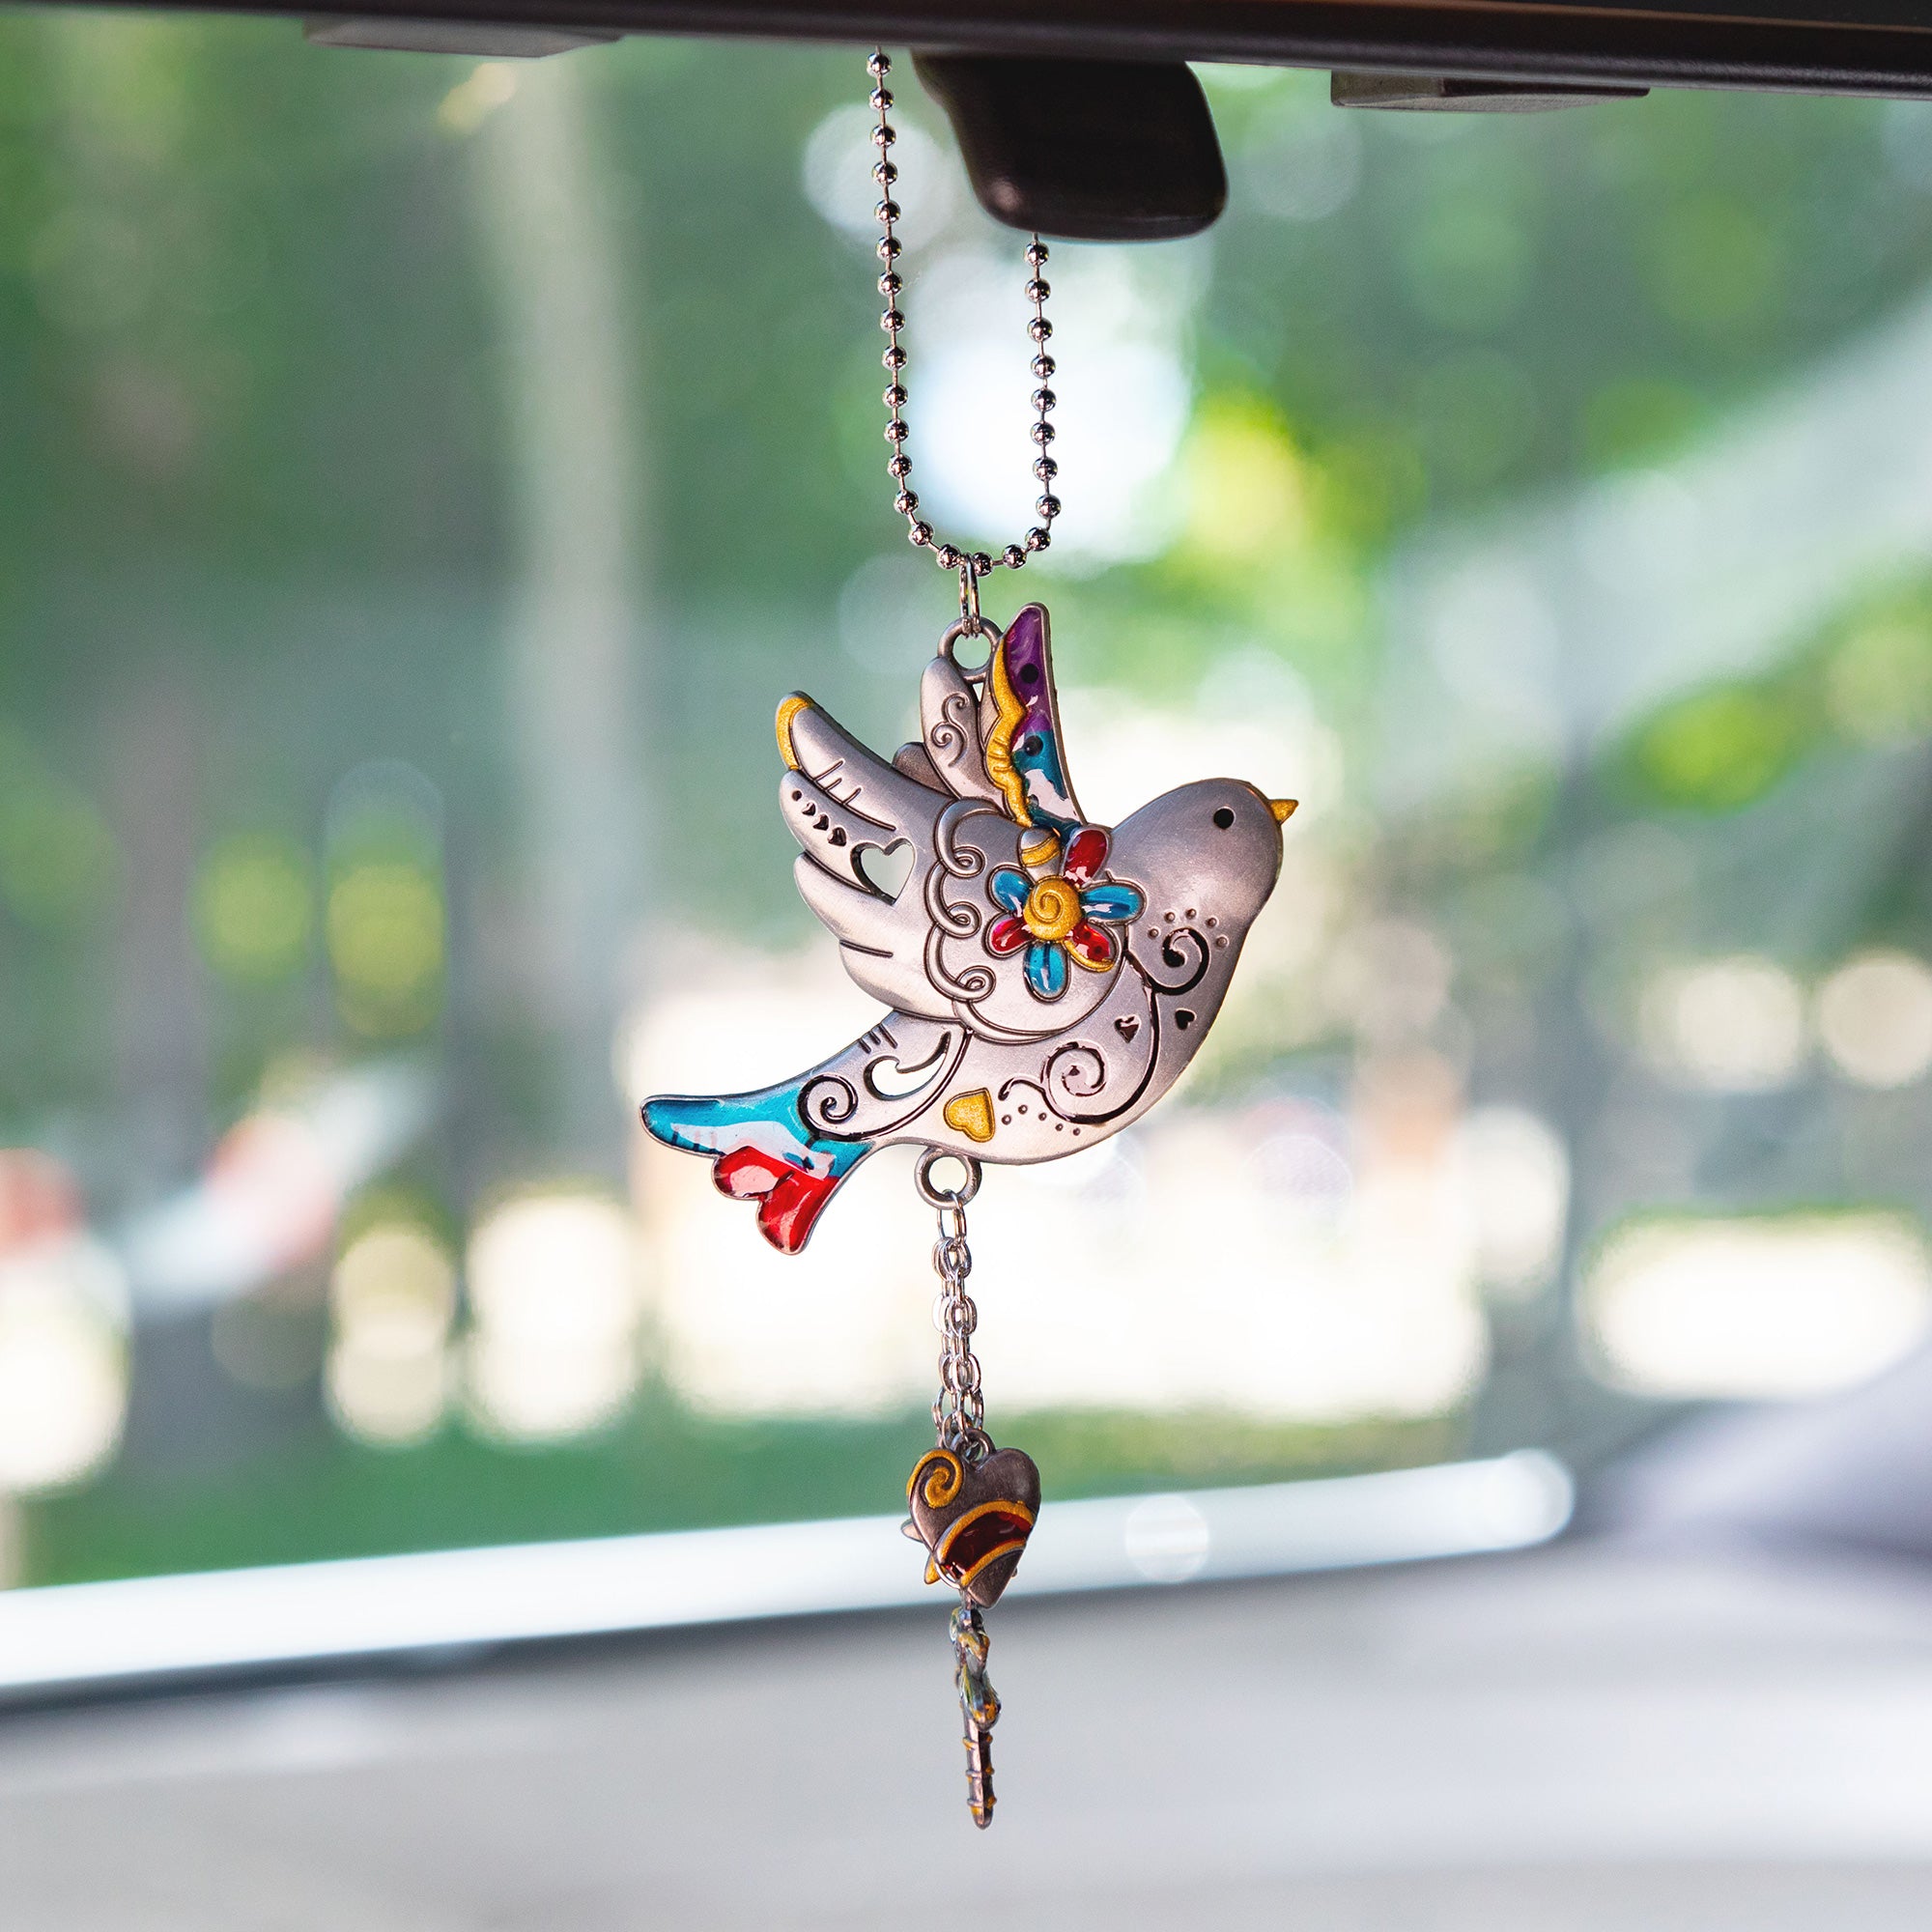 Colorful Creations Car Charm - Bird In Flight